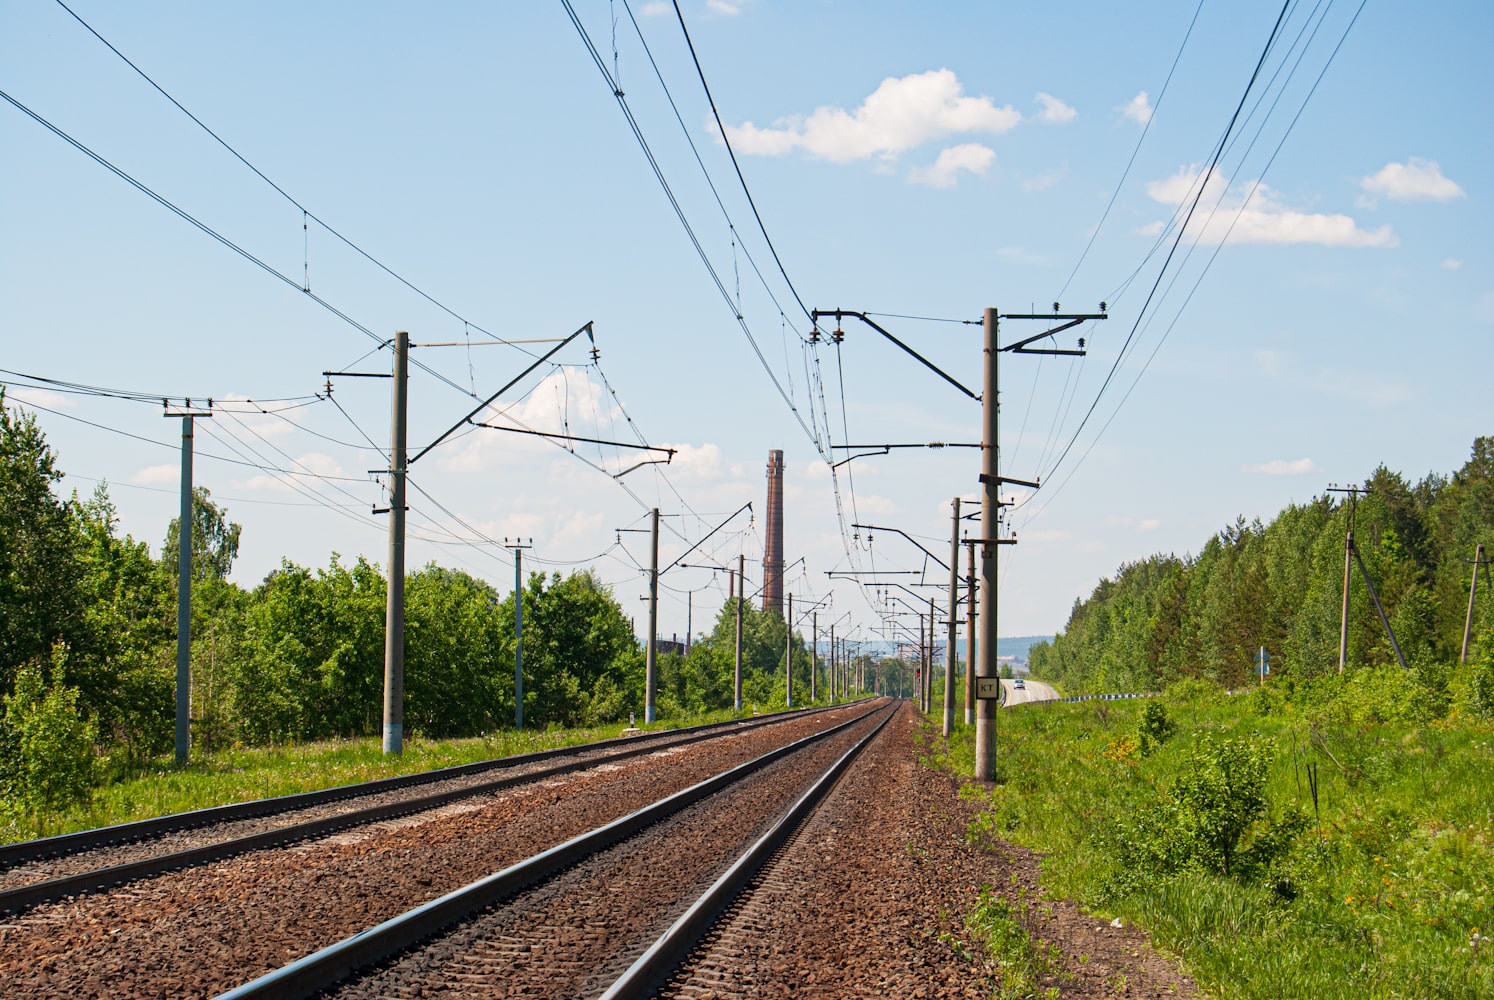 Sverdlovsk Railway — Station and Hauls